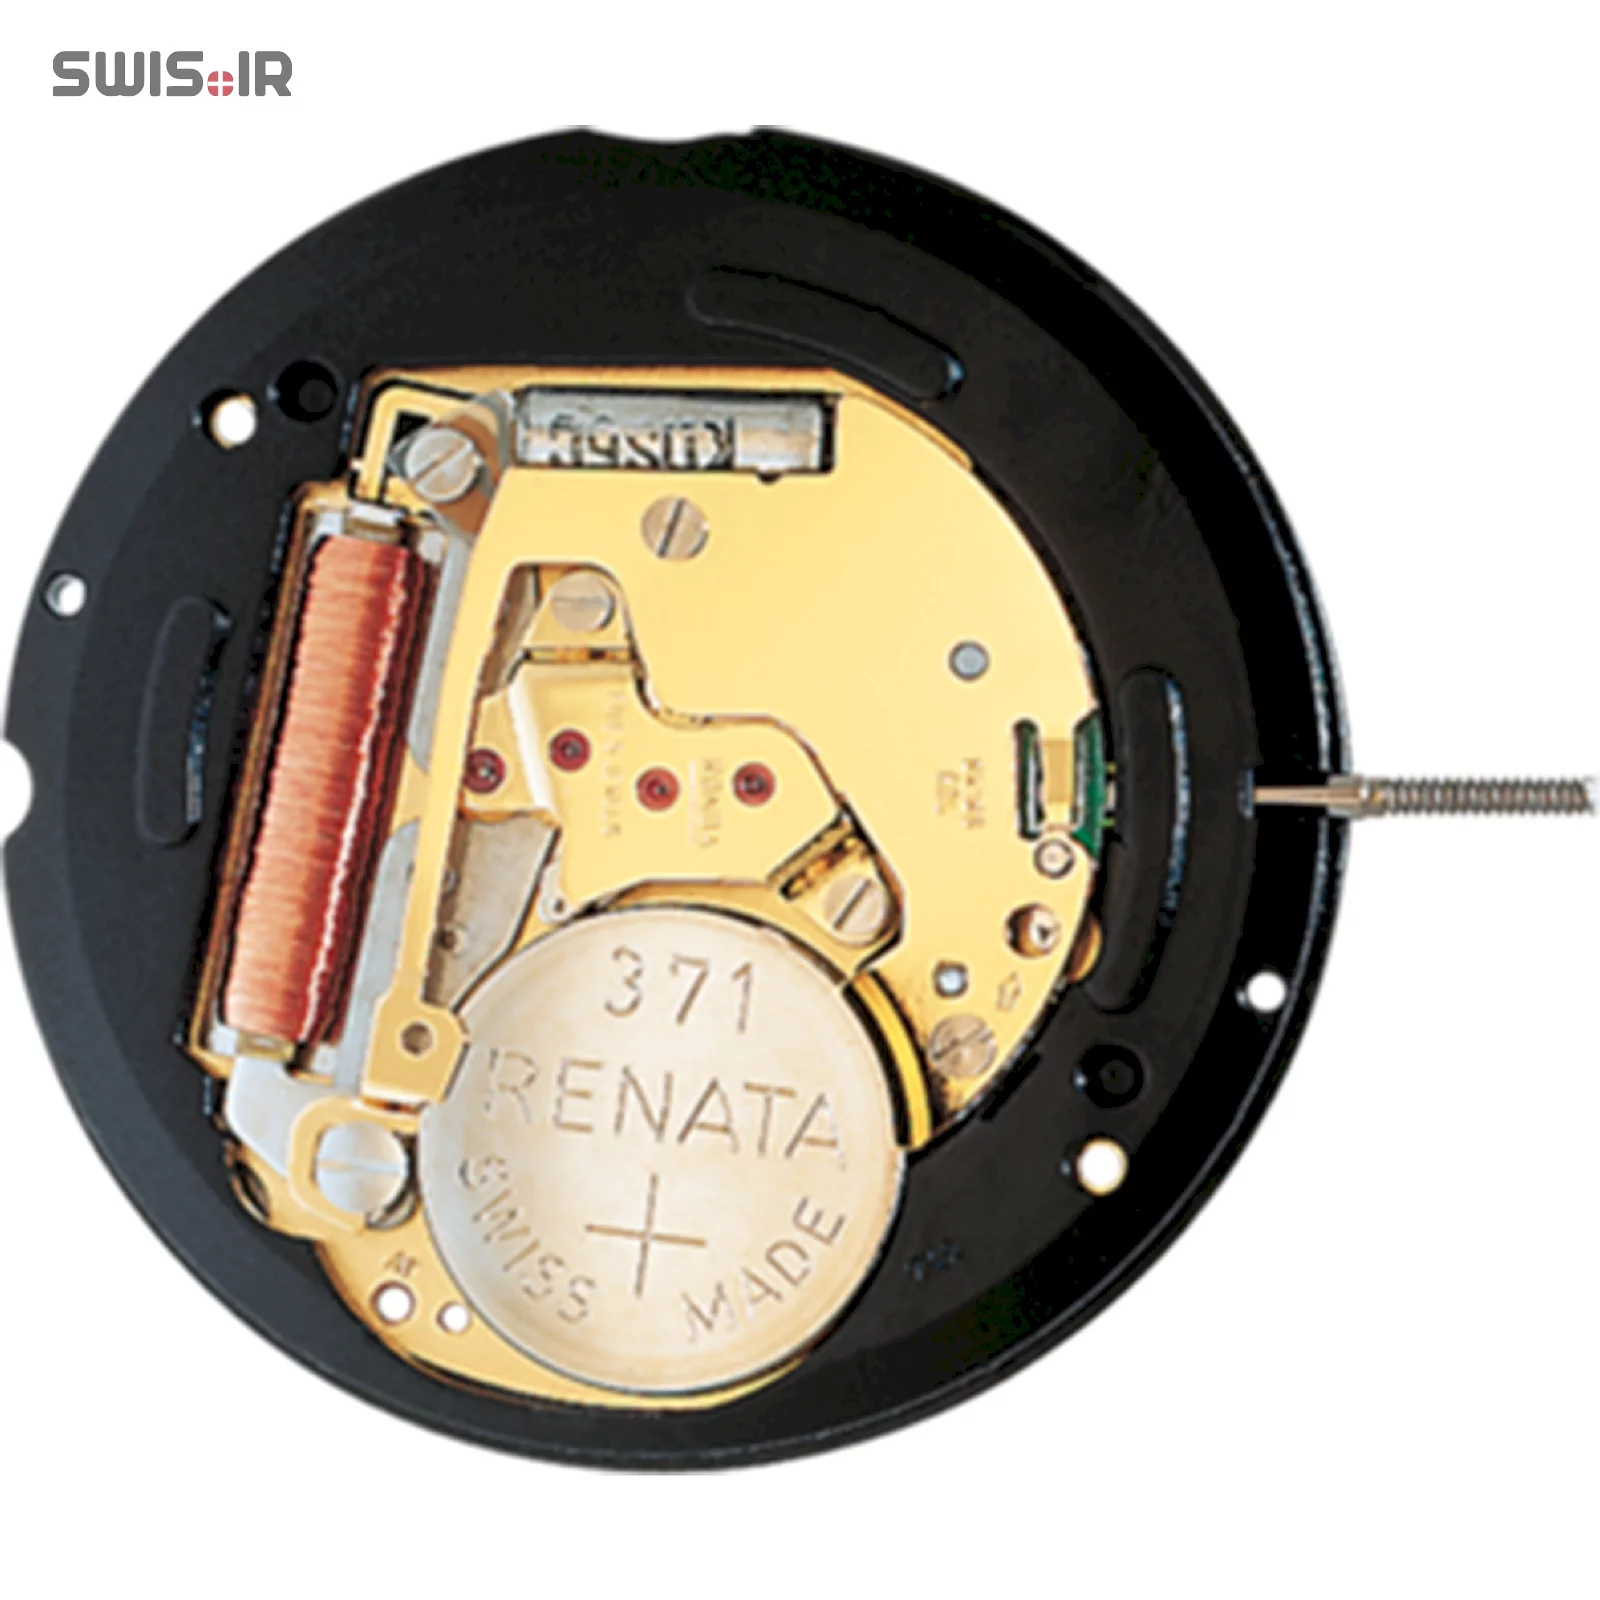 تصویر پشت موتور ساعت کالیبر 715 ساخت شرکت روندا سوئیس